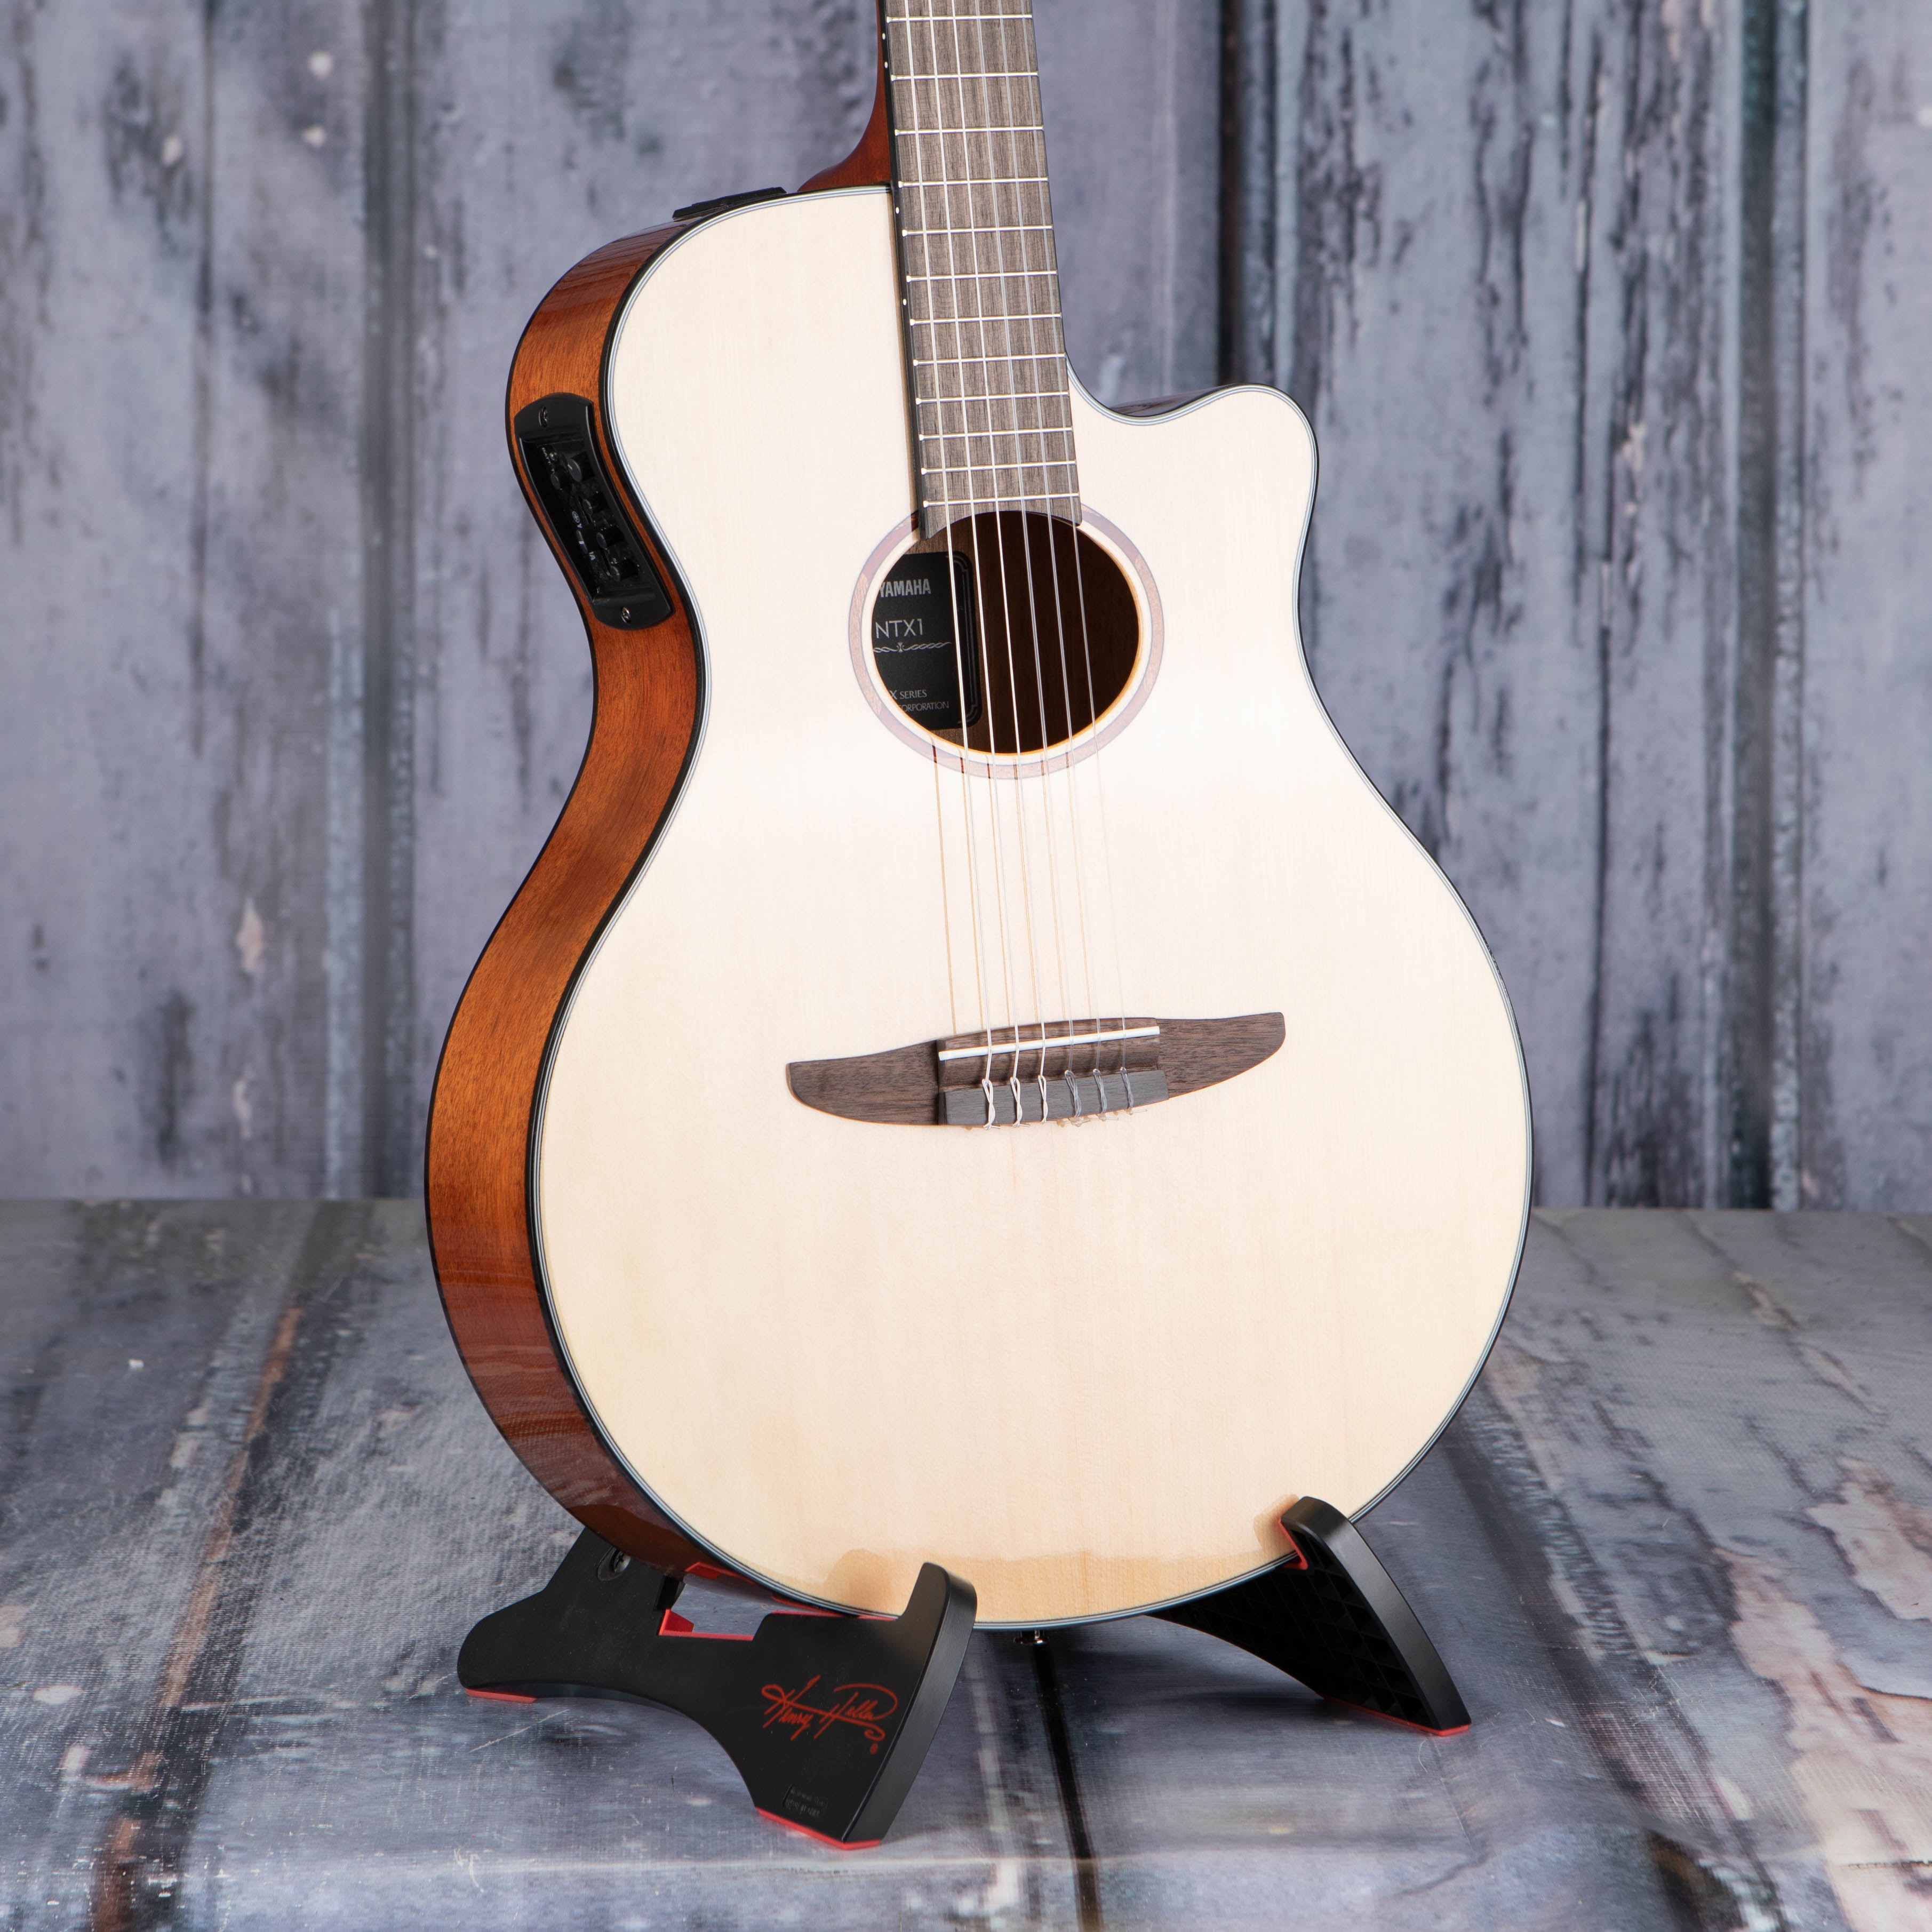 Yamaha NTX1 Classical Acoustic/Electric Guitar, Natural, angle